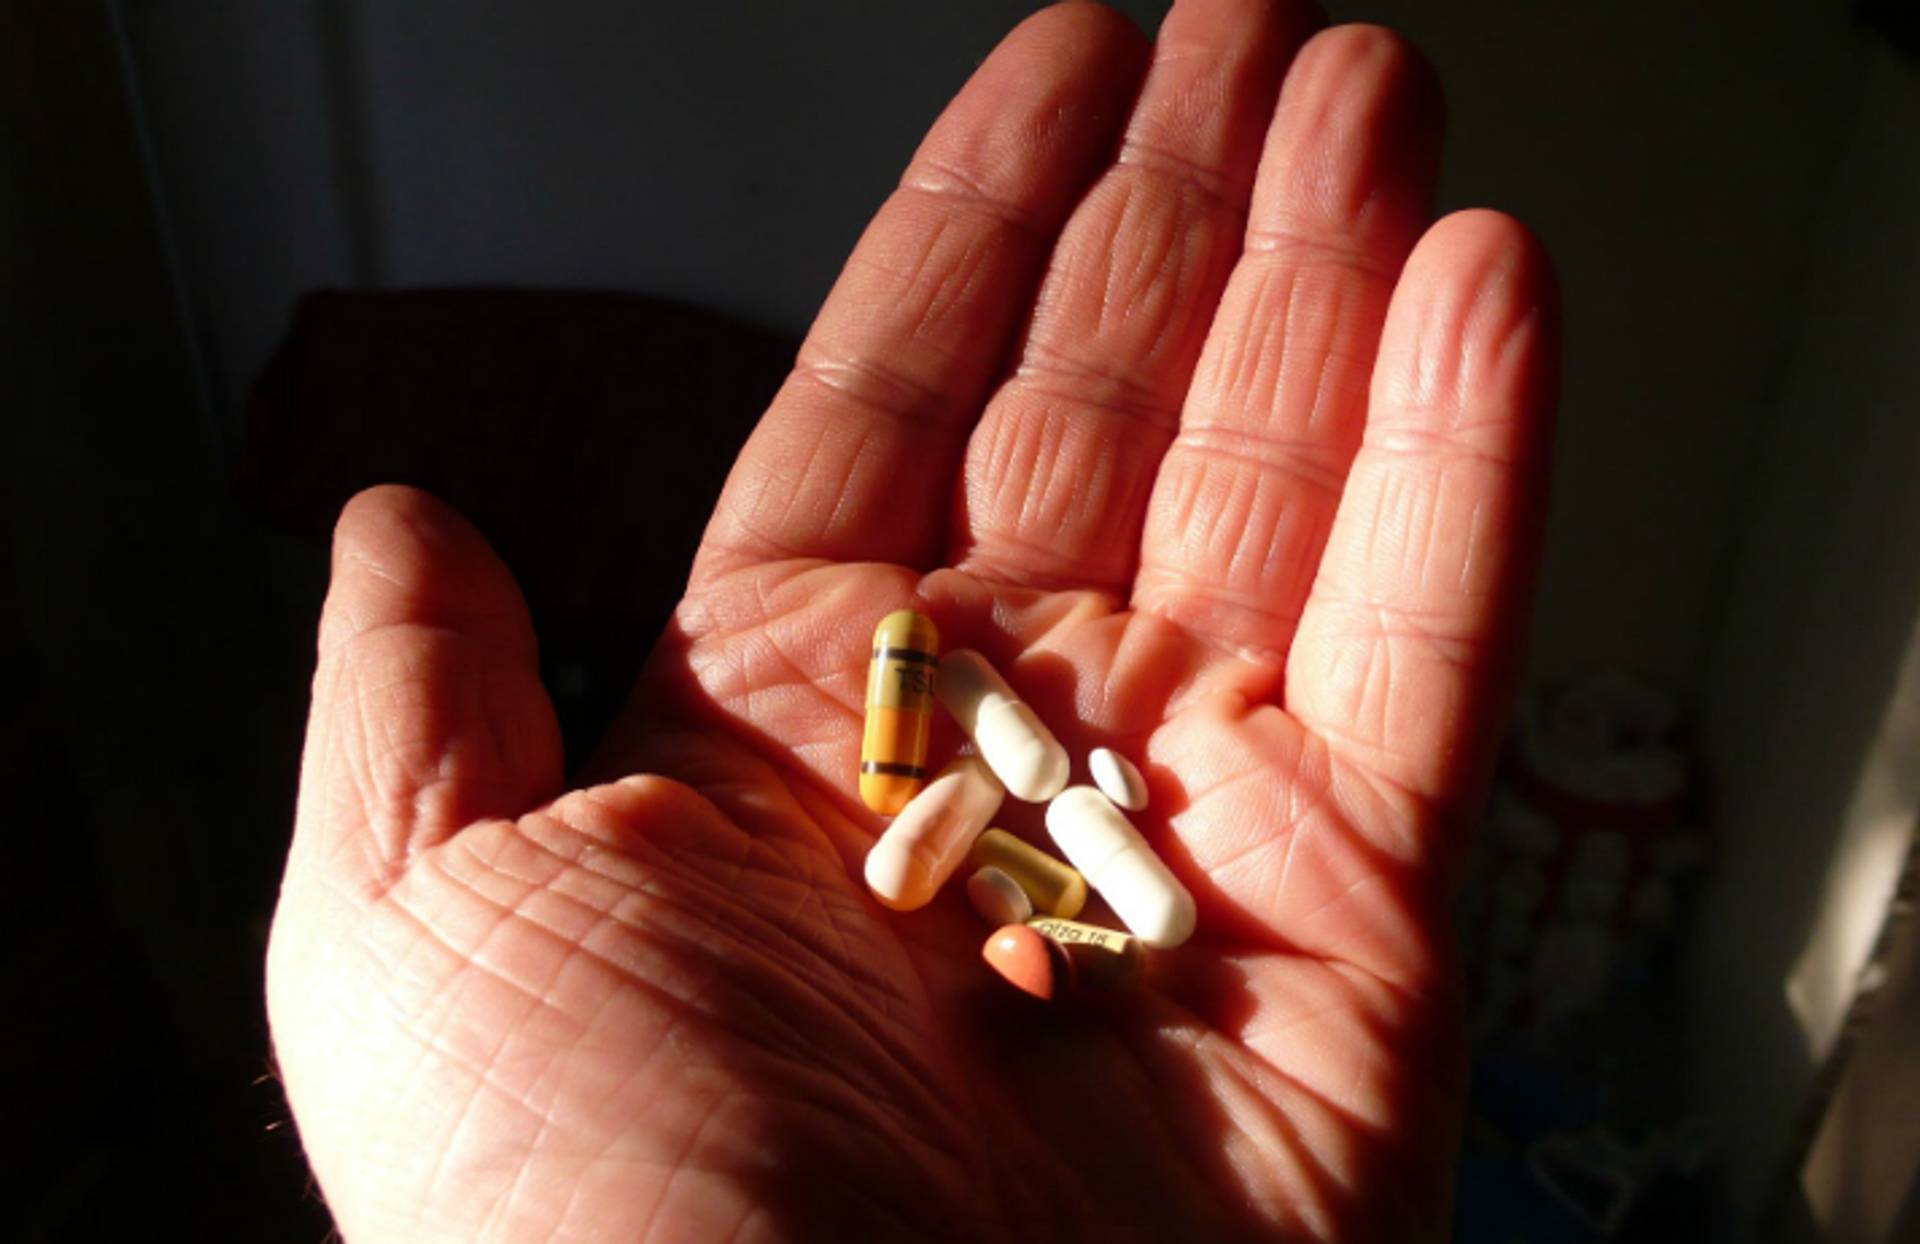 Prescription drugs found to alter morality